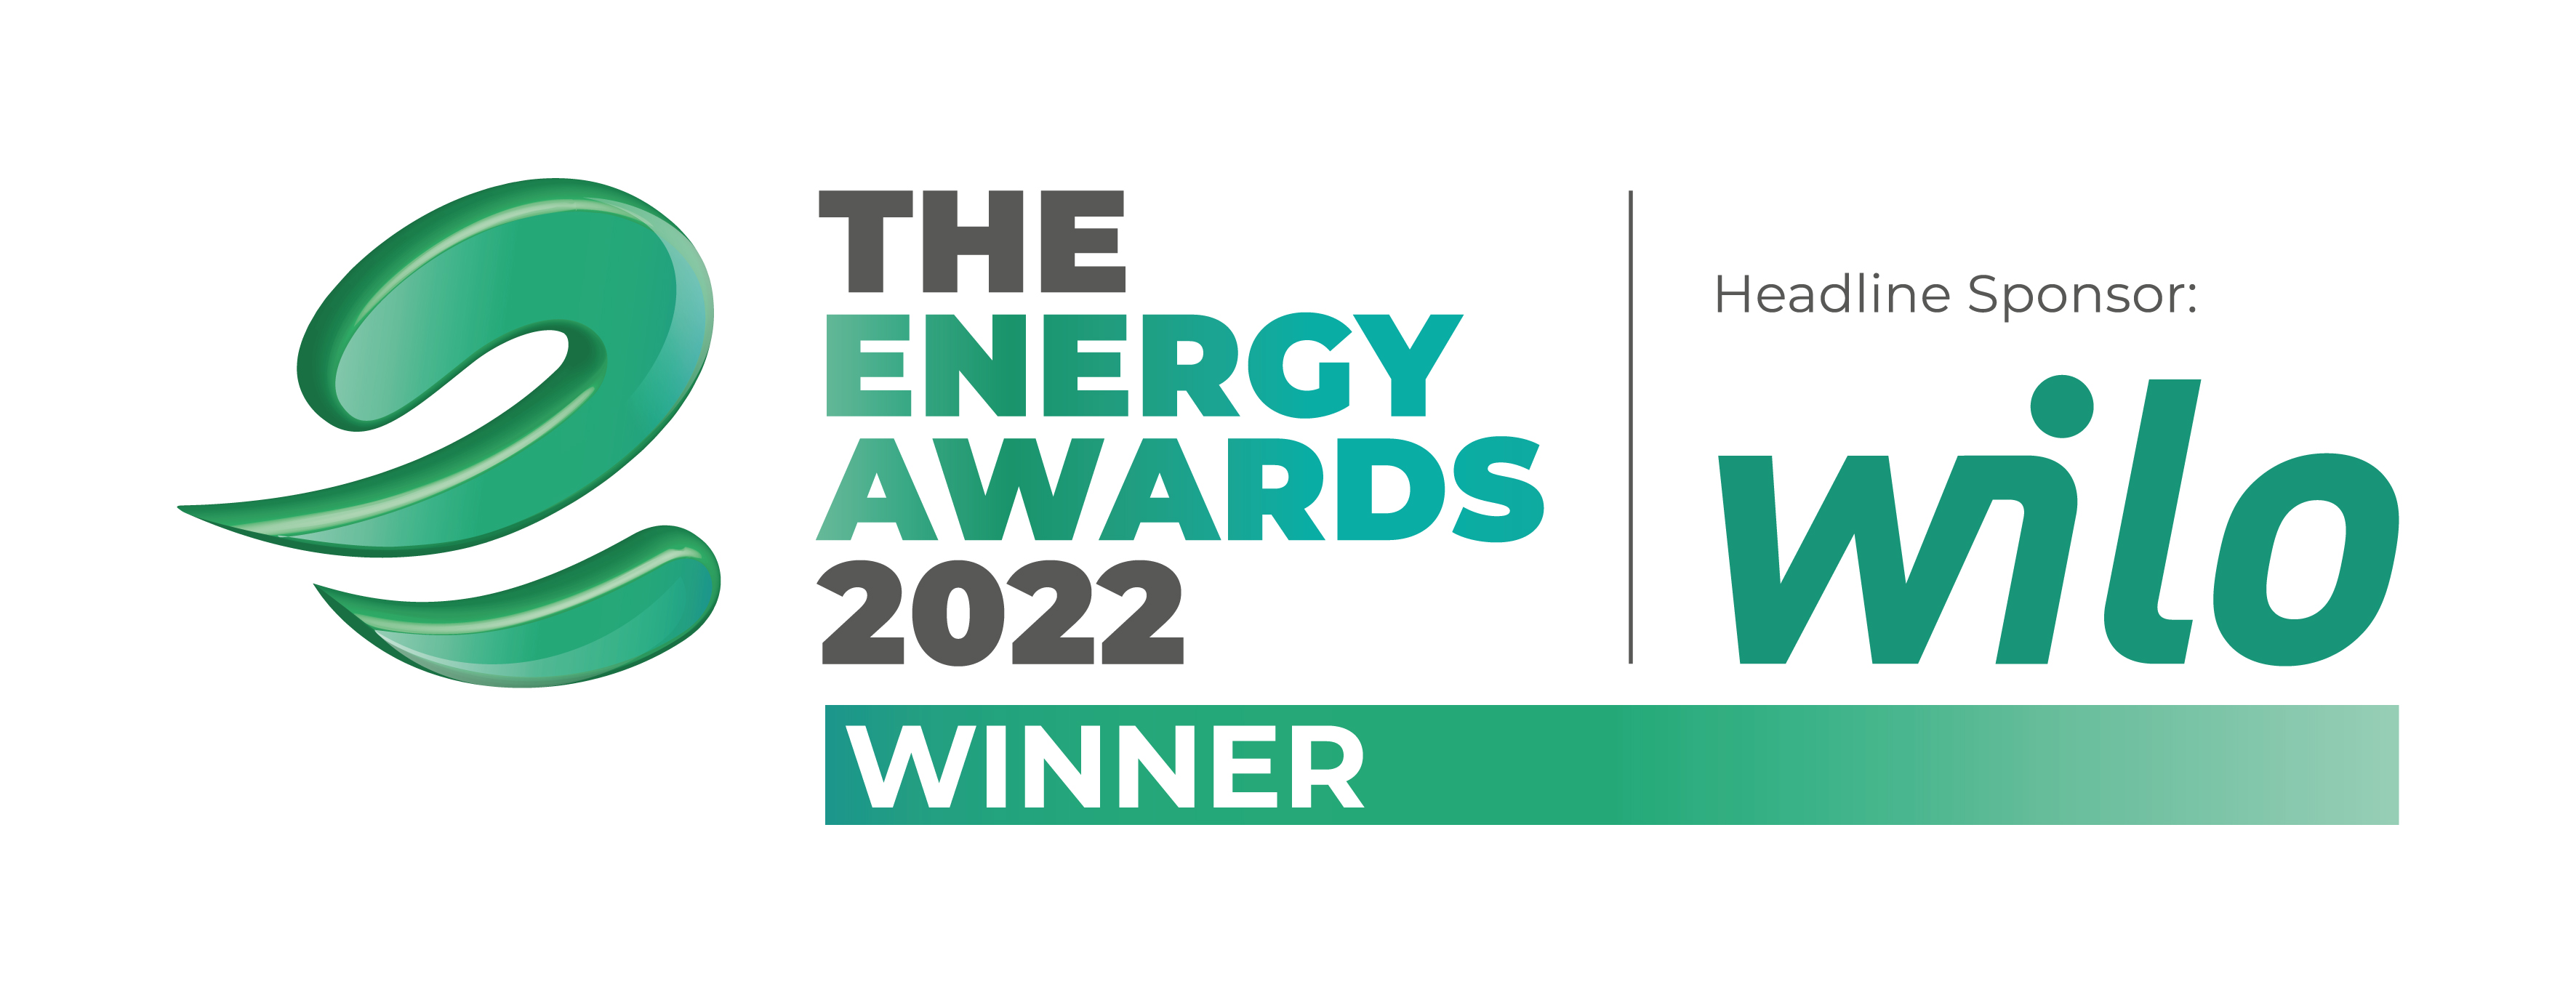 The Energy Awards 2022